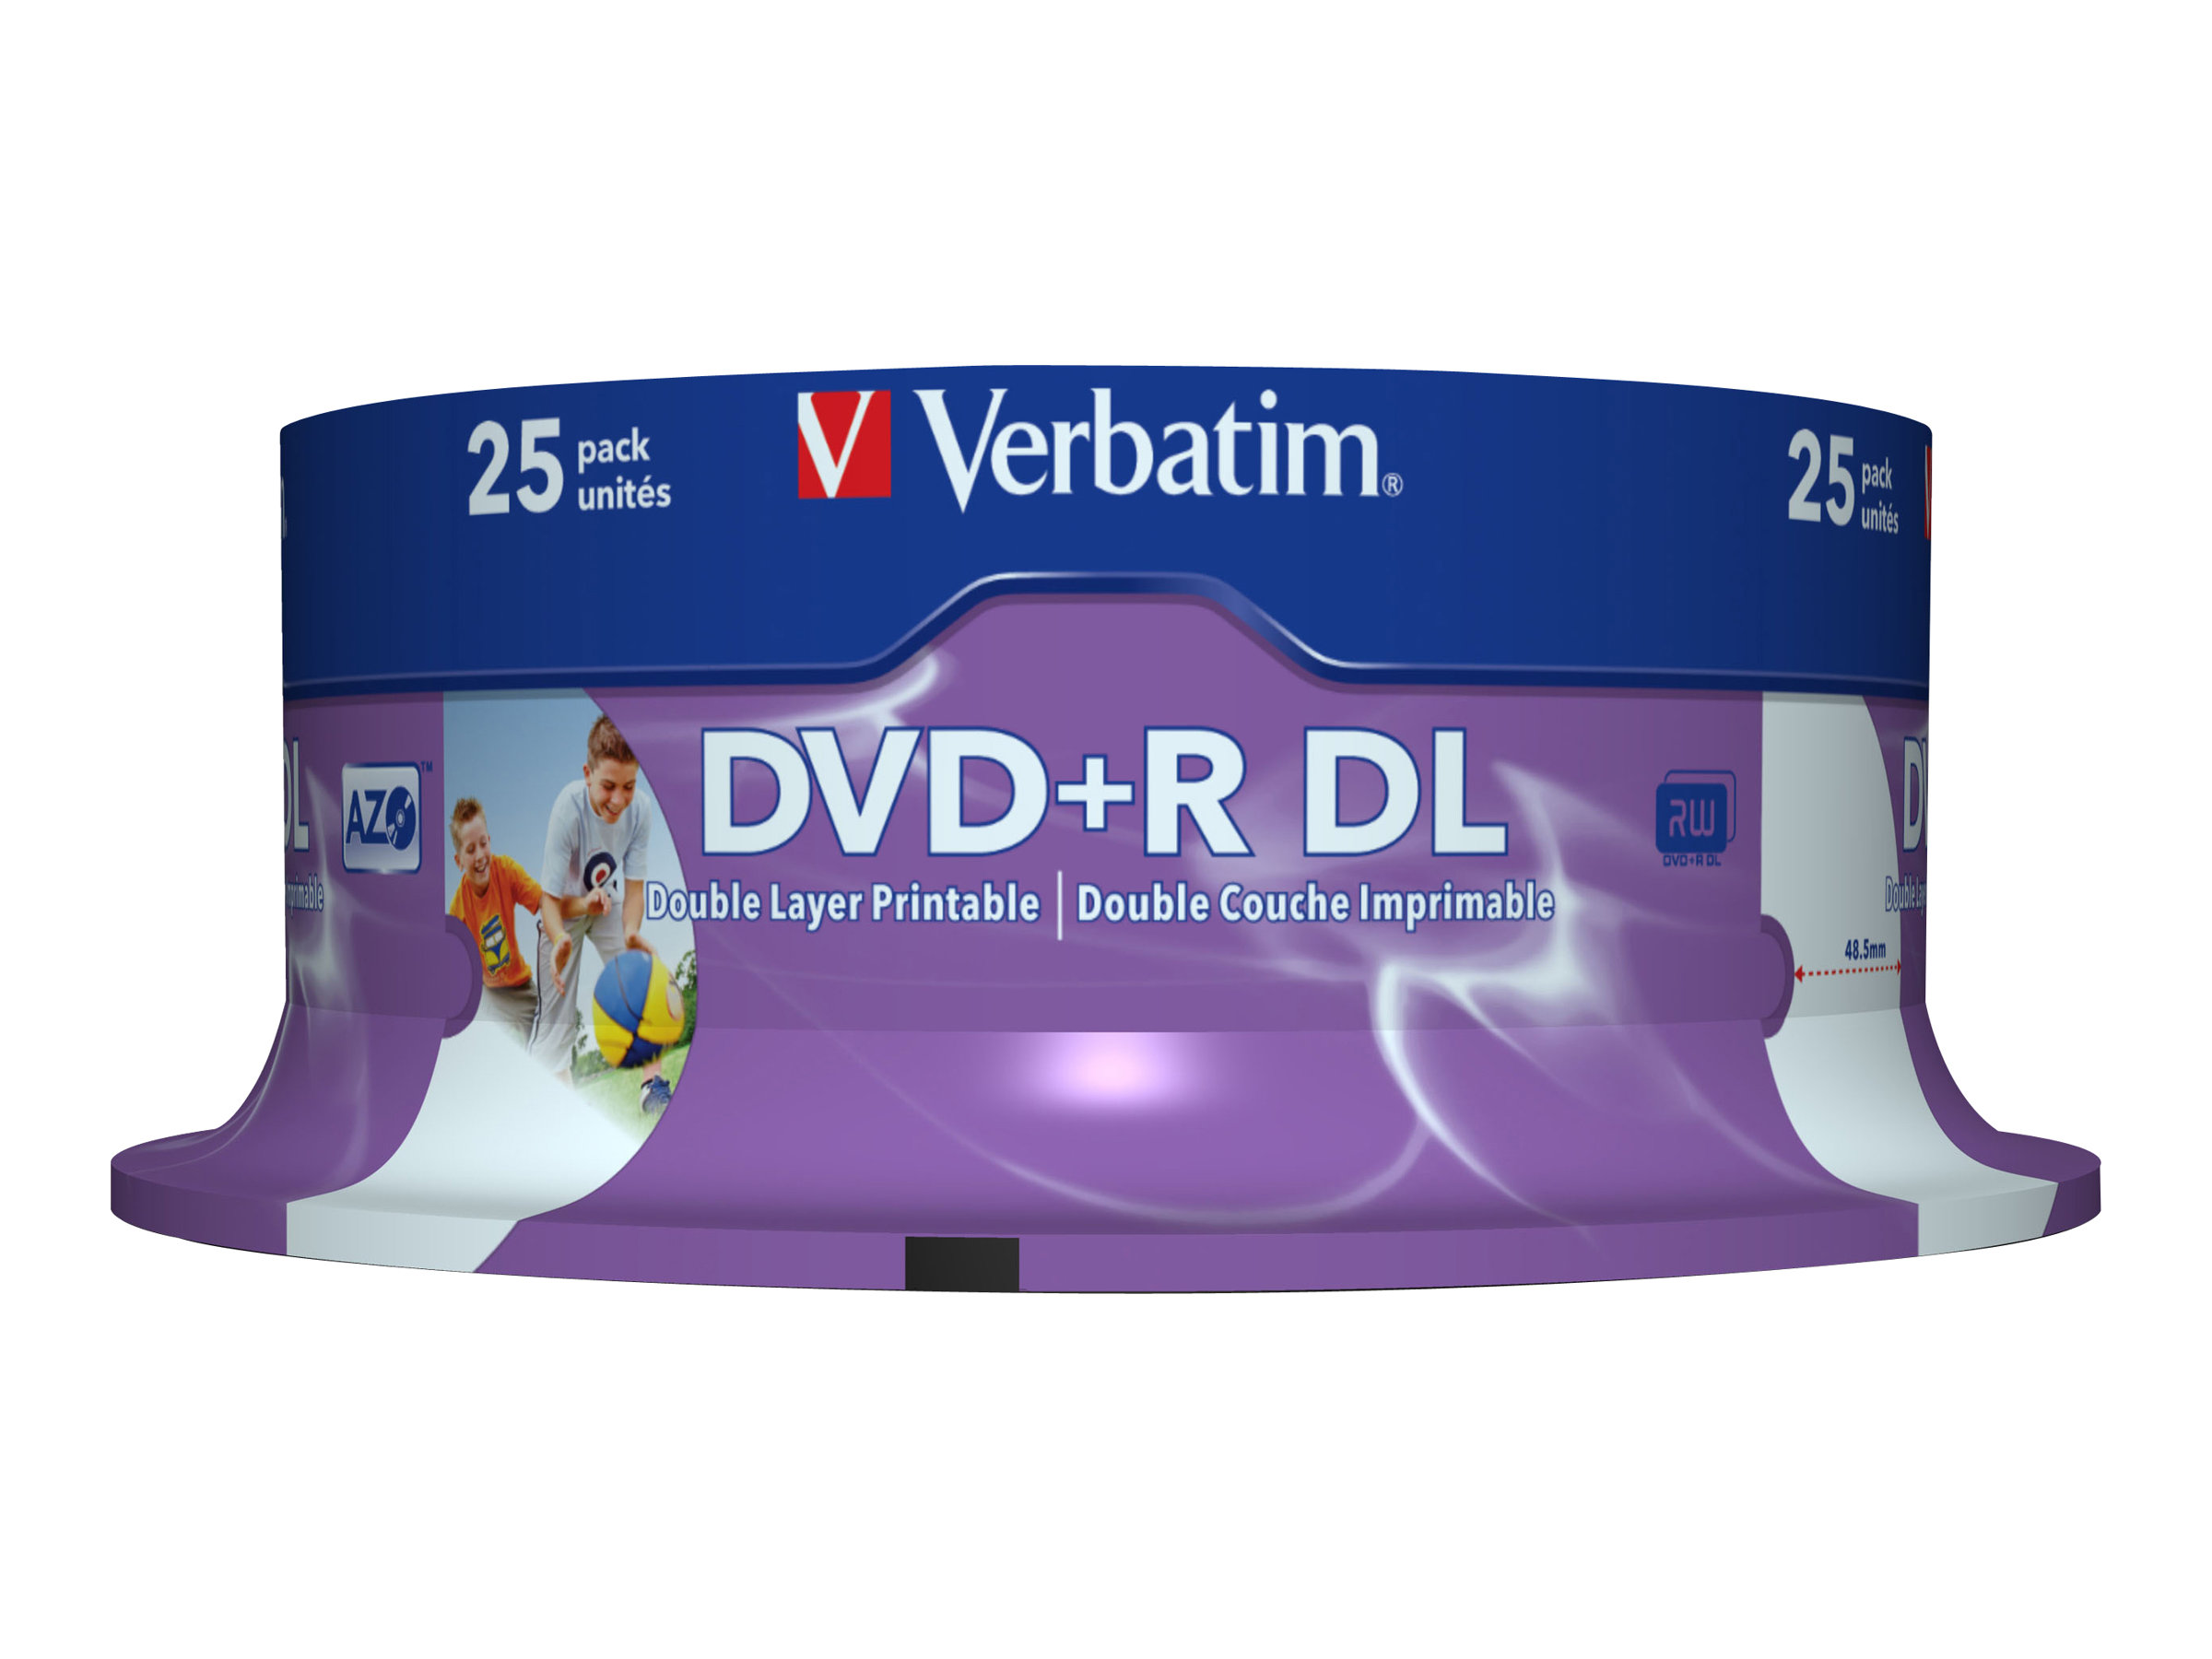 DVD+R Verbatim 8,5GB 25pcs Pack double 8x Spindel wide print retail